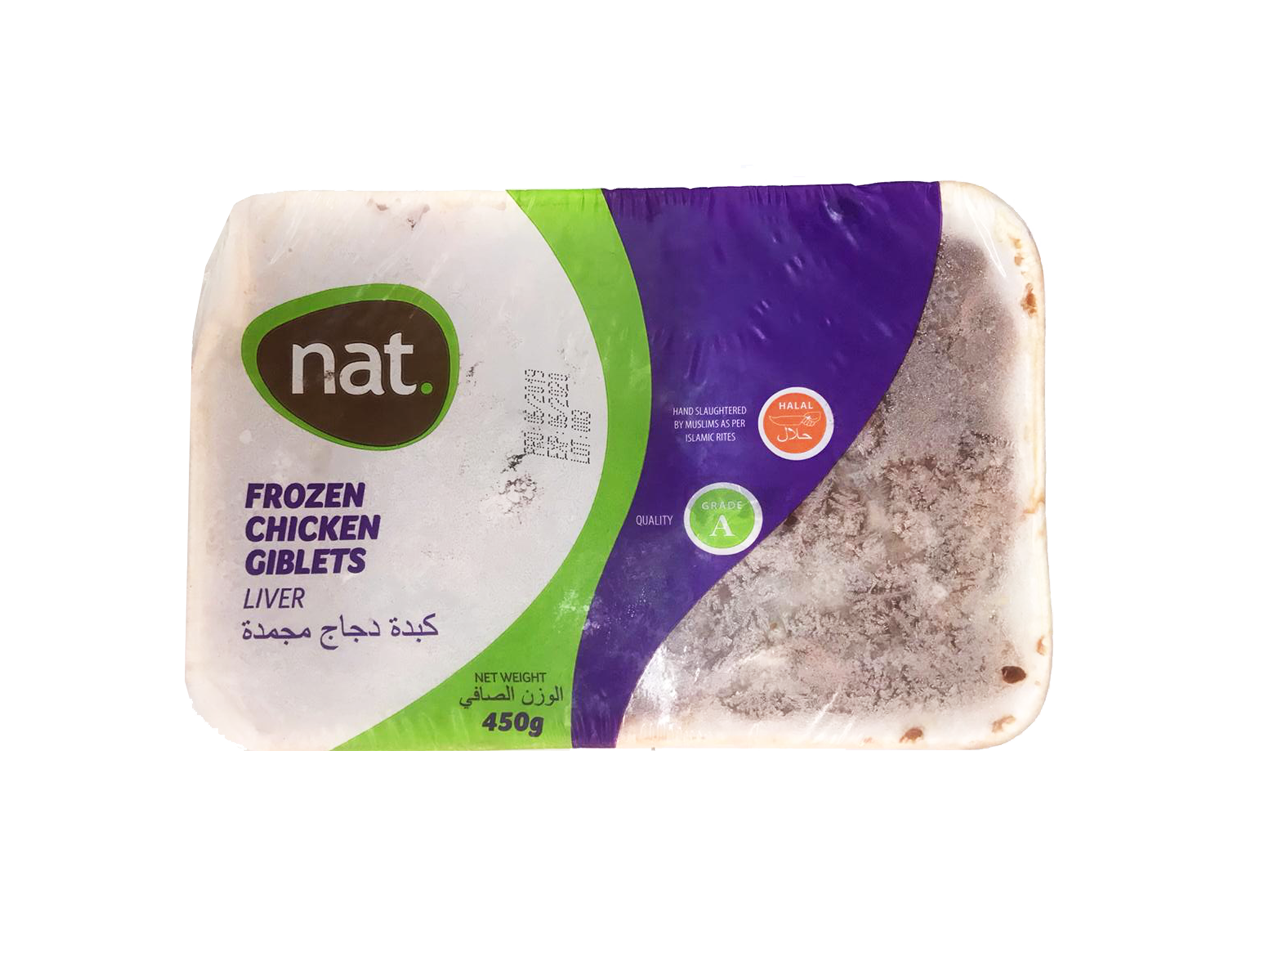 Nat Frozen Chicken Giblets - Liver 450g